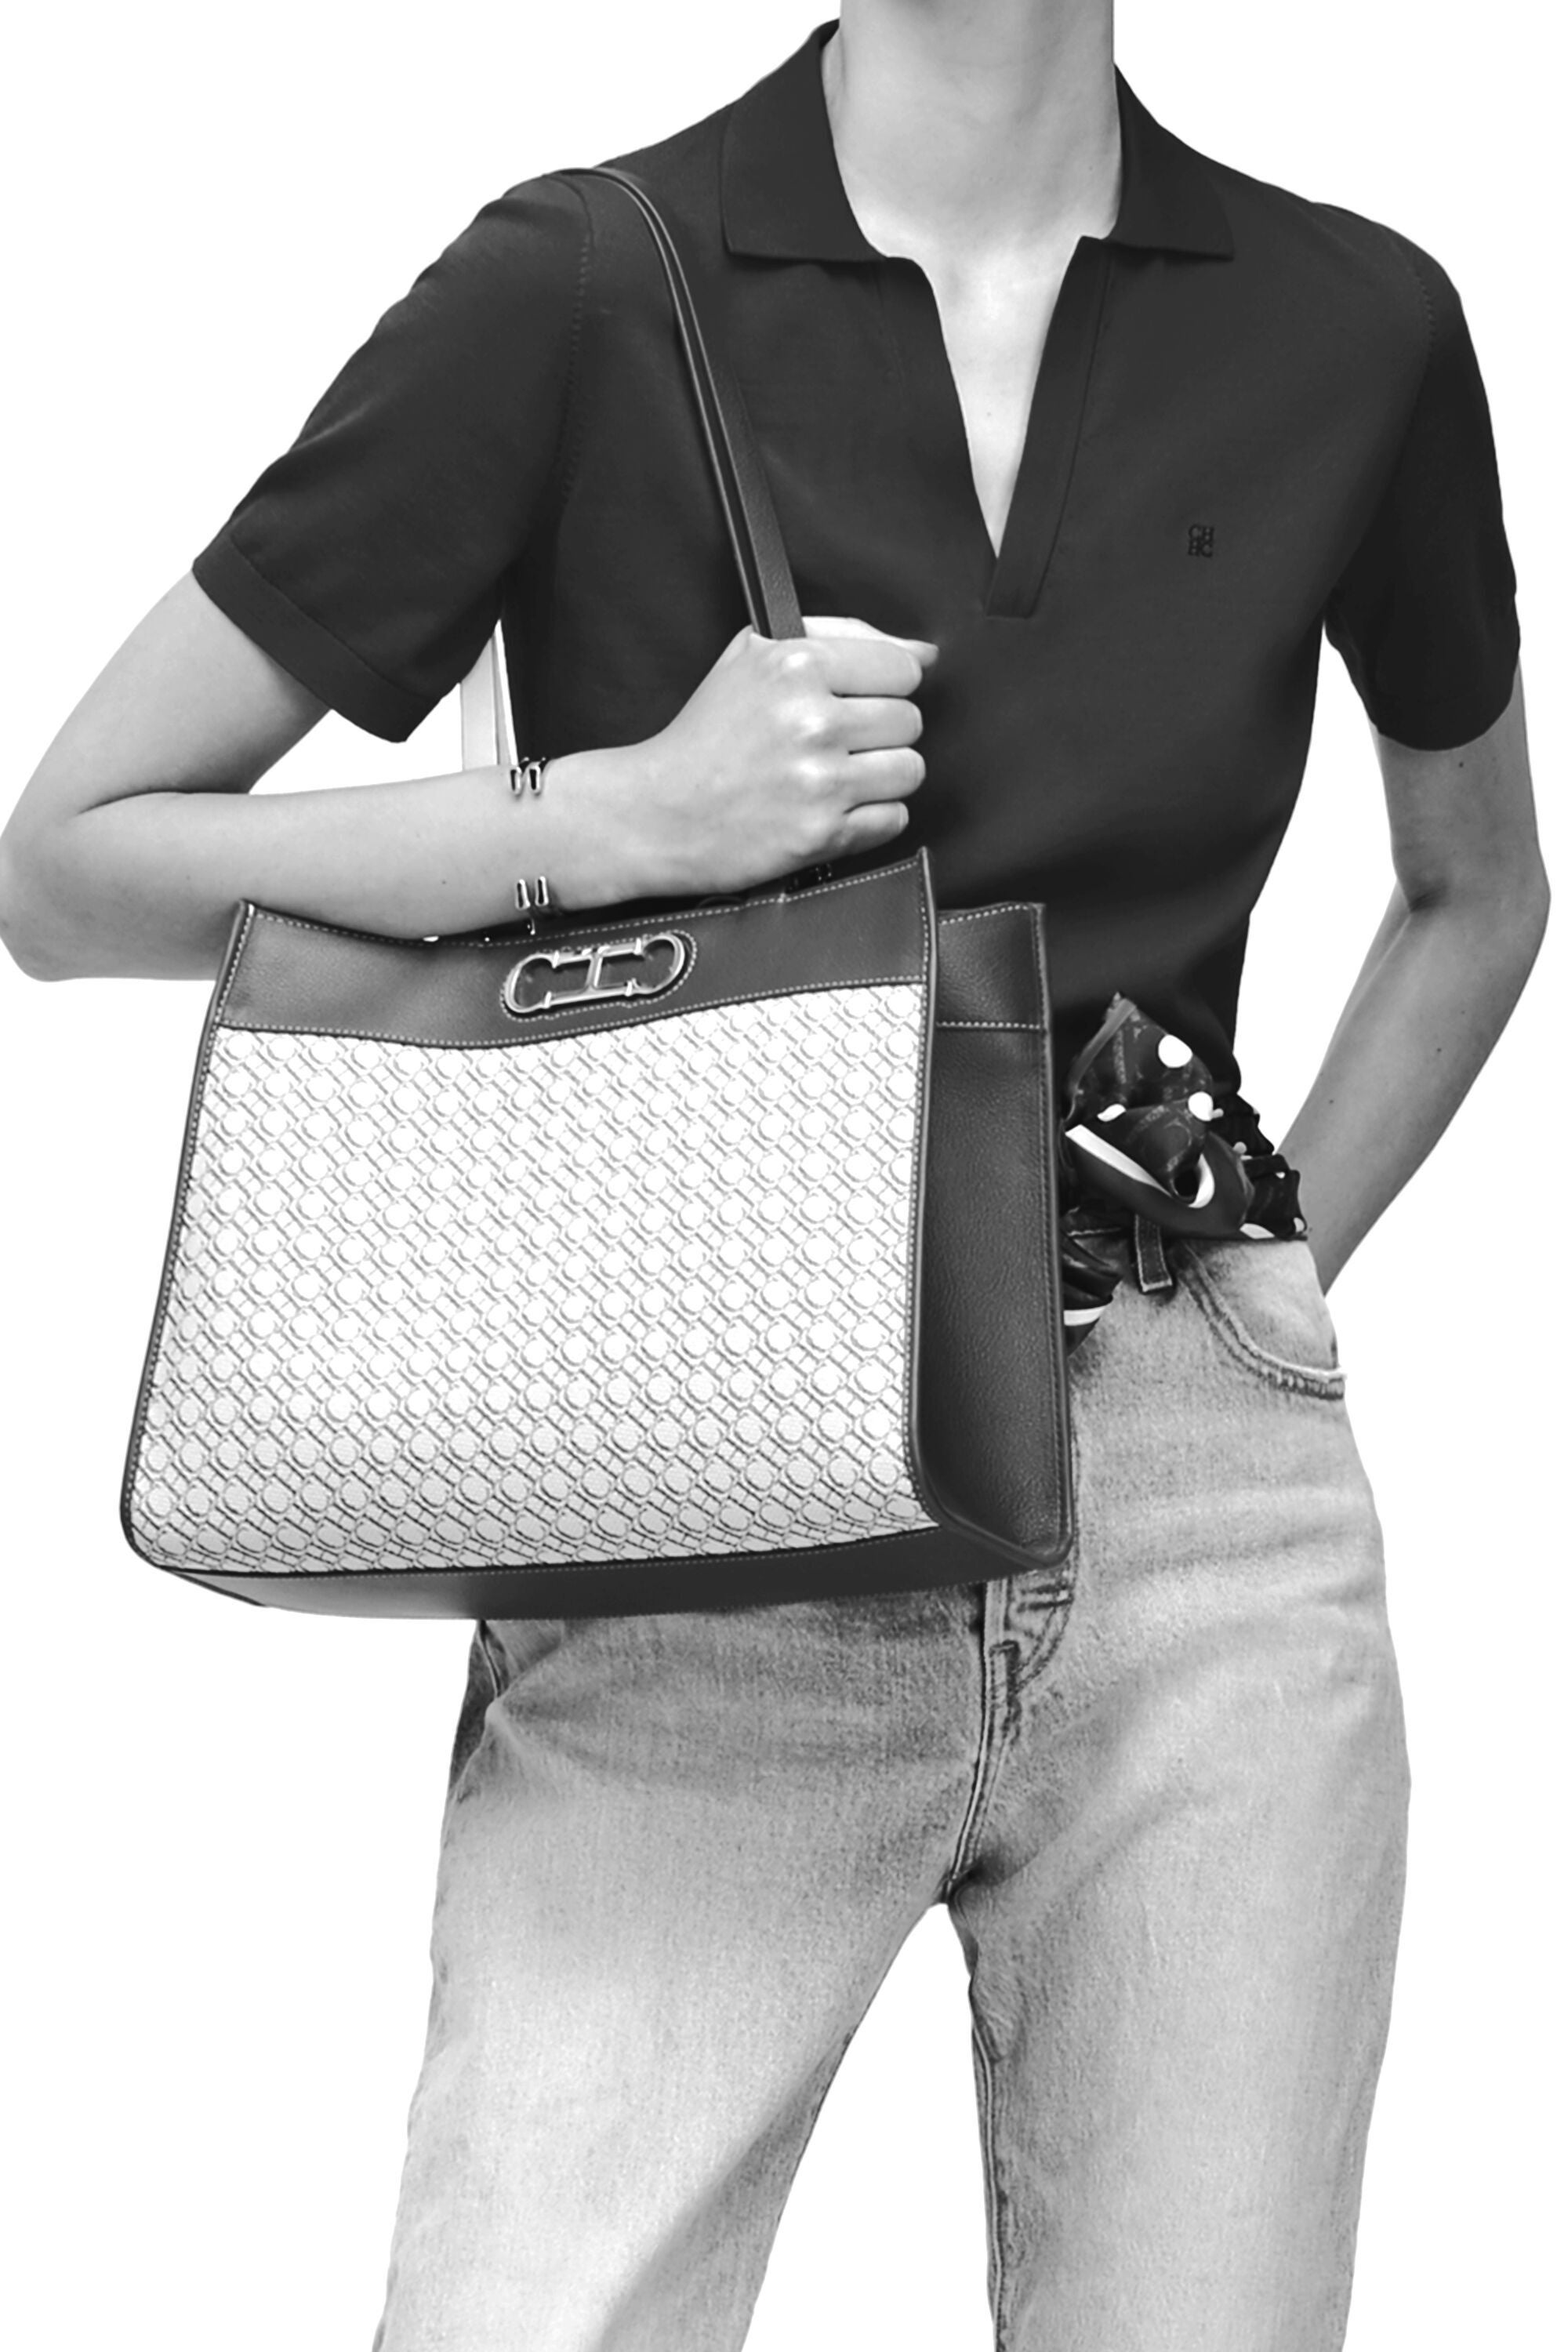 Shopping  Large shoulder bag caracas/little caracas - CH Carolina Herrera  United States